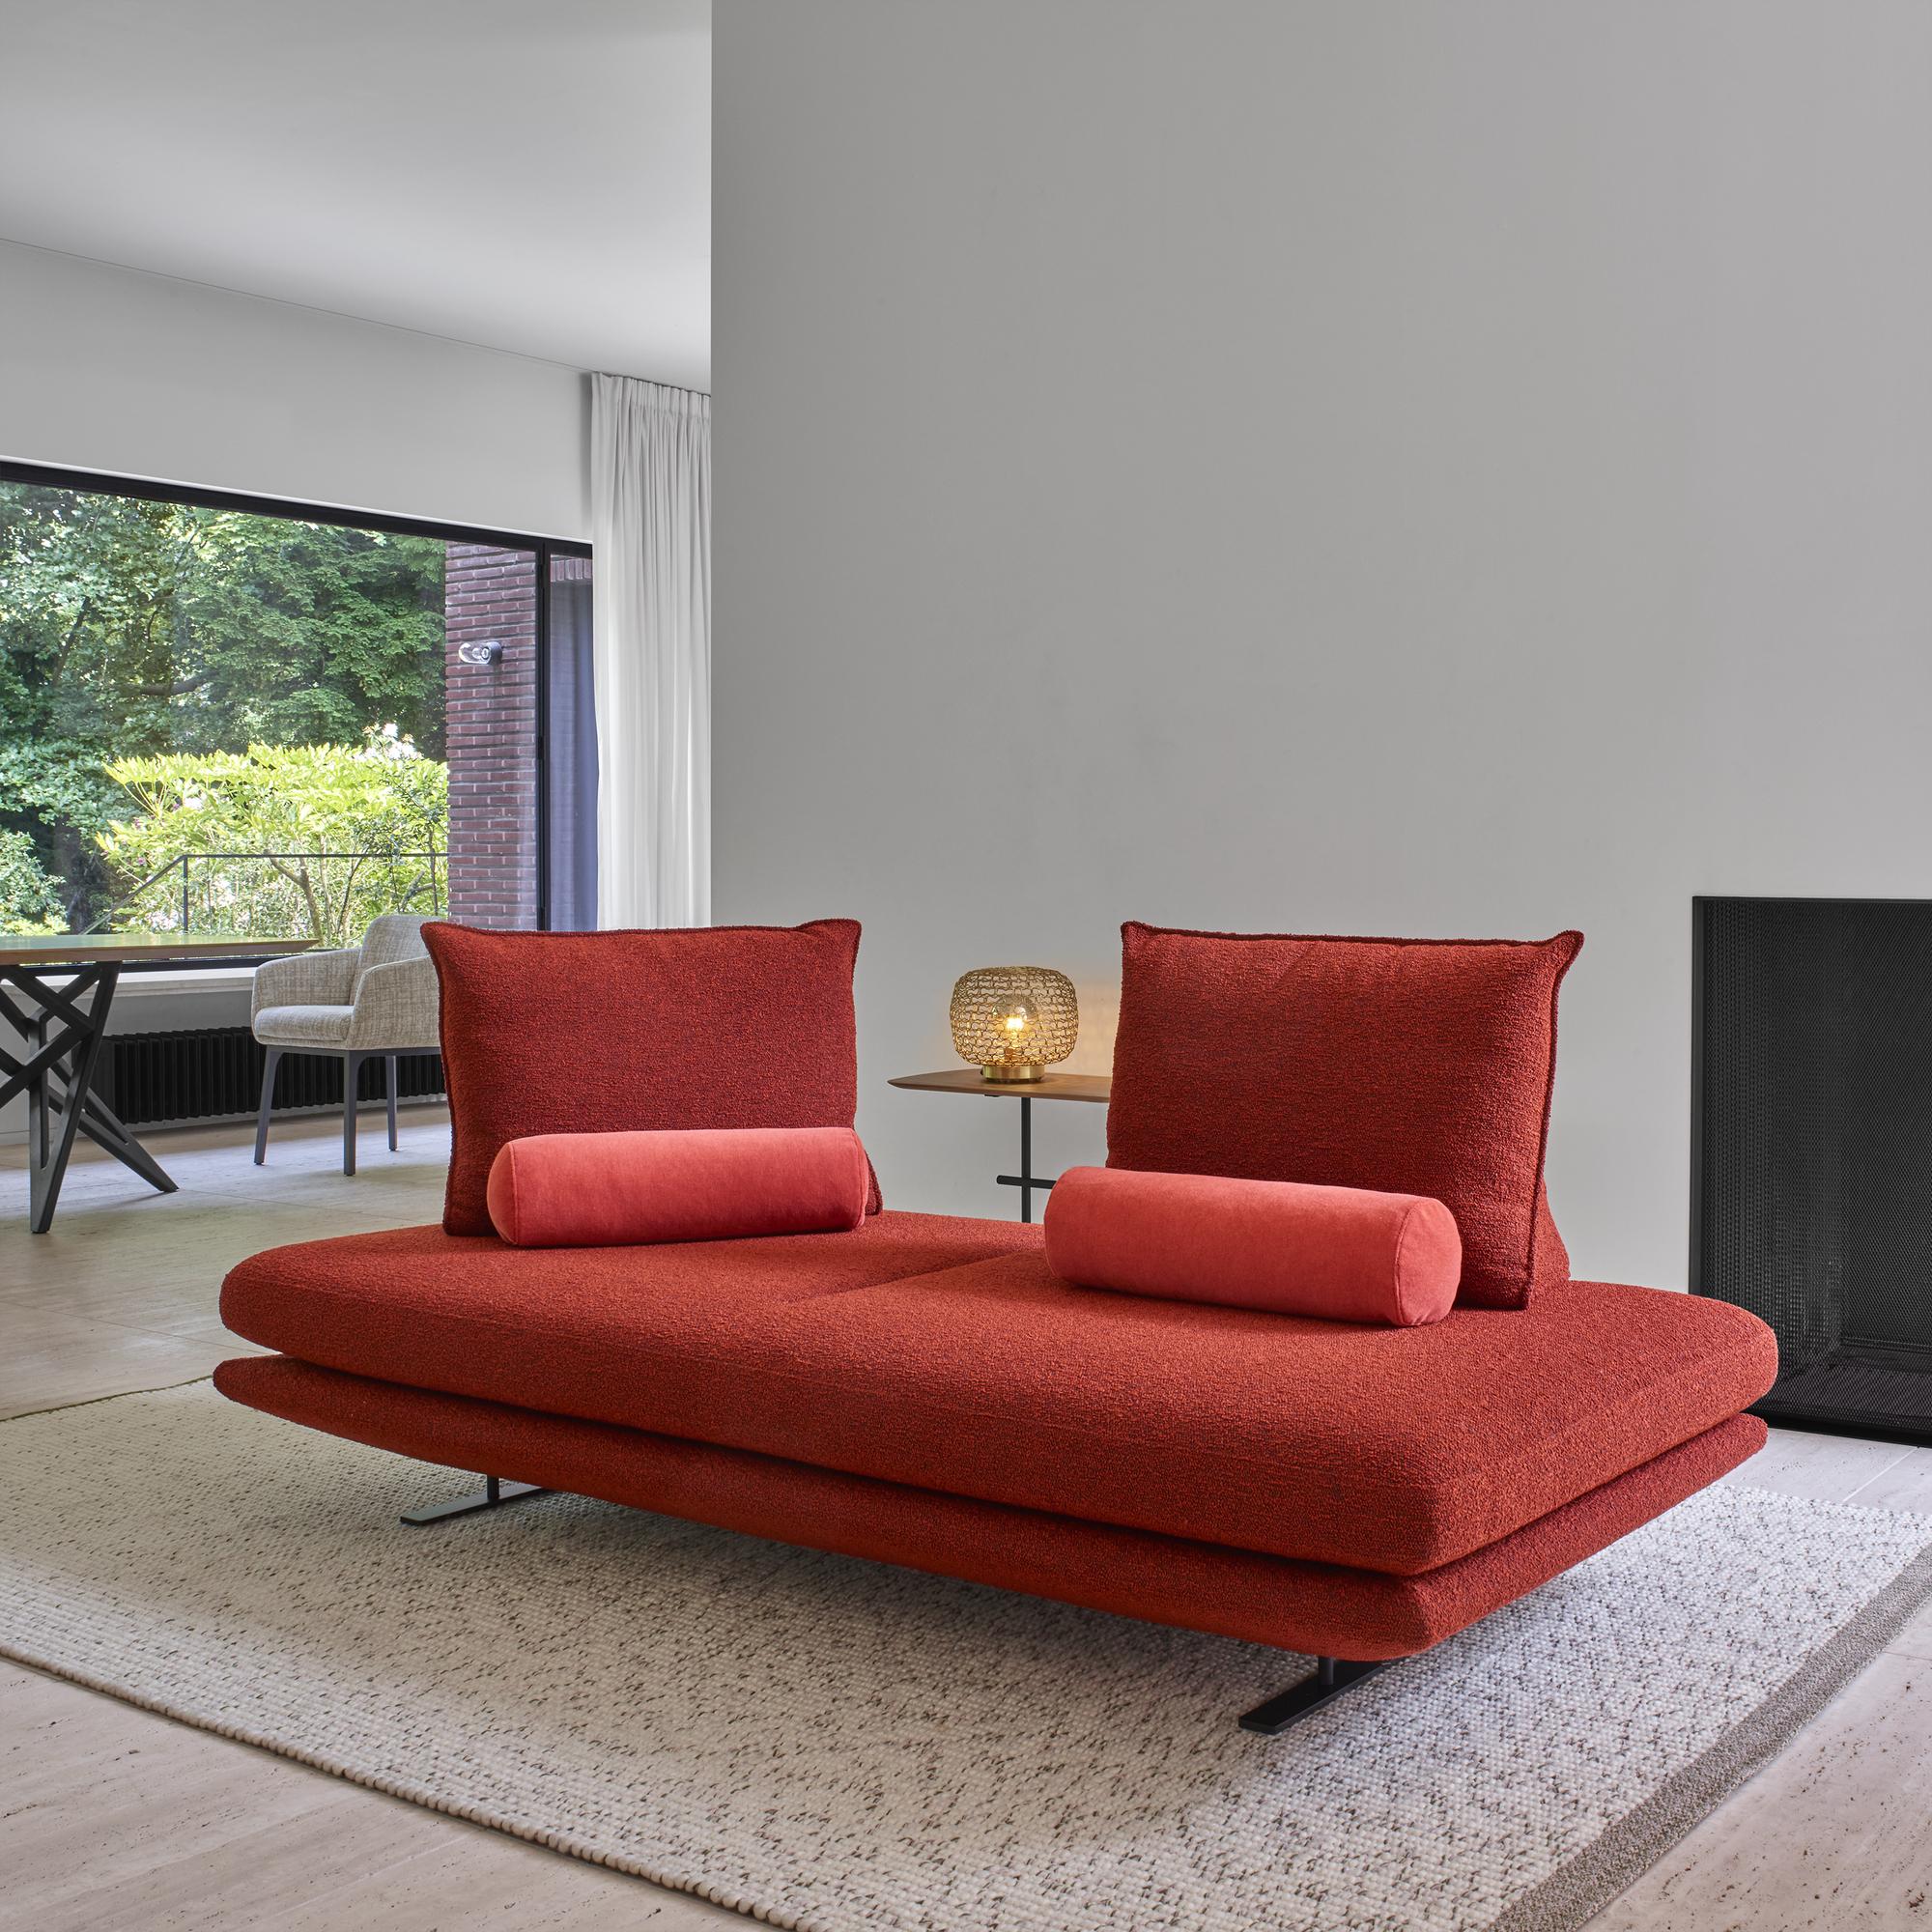 Sofas from Designer : Christian Werner